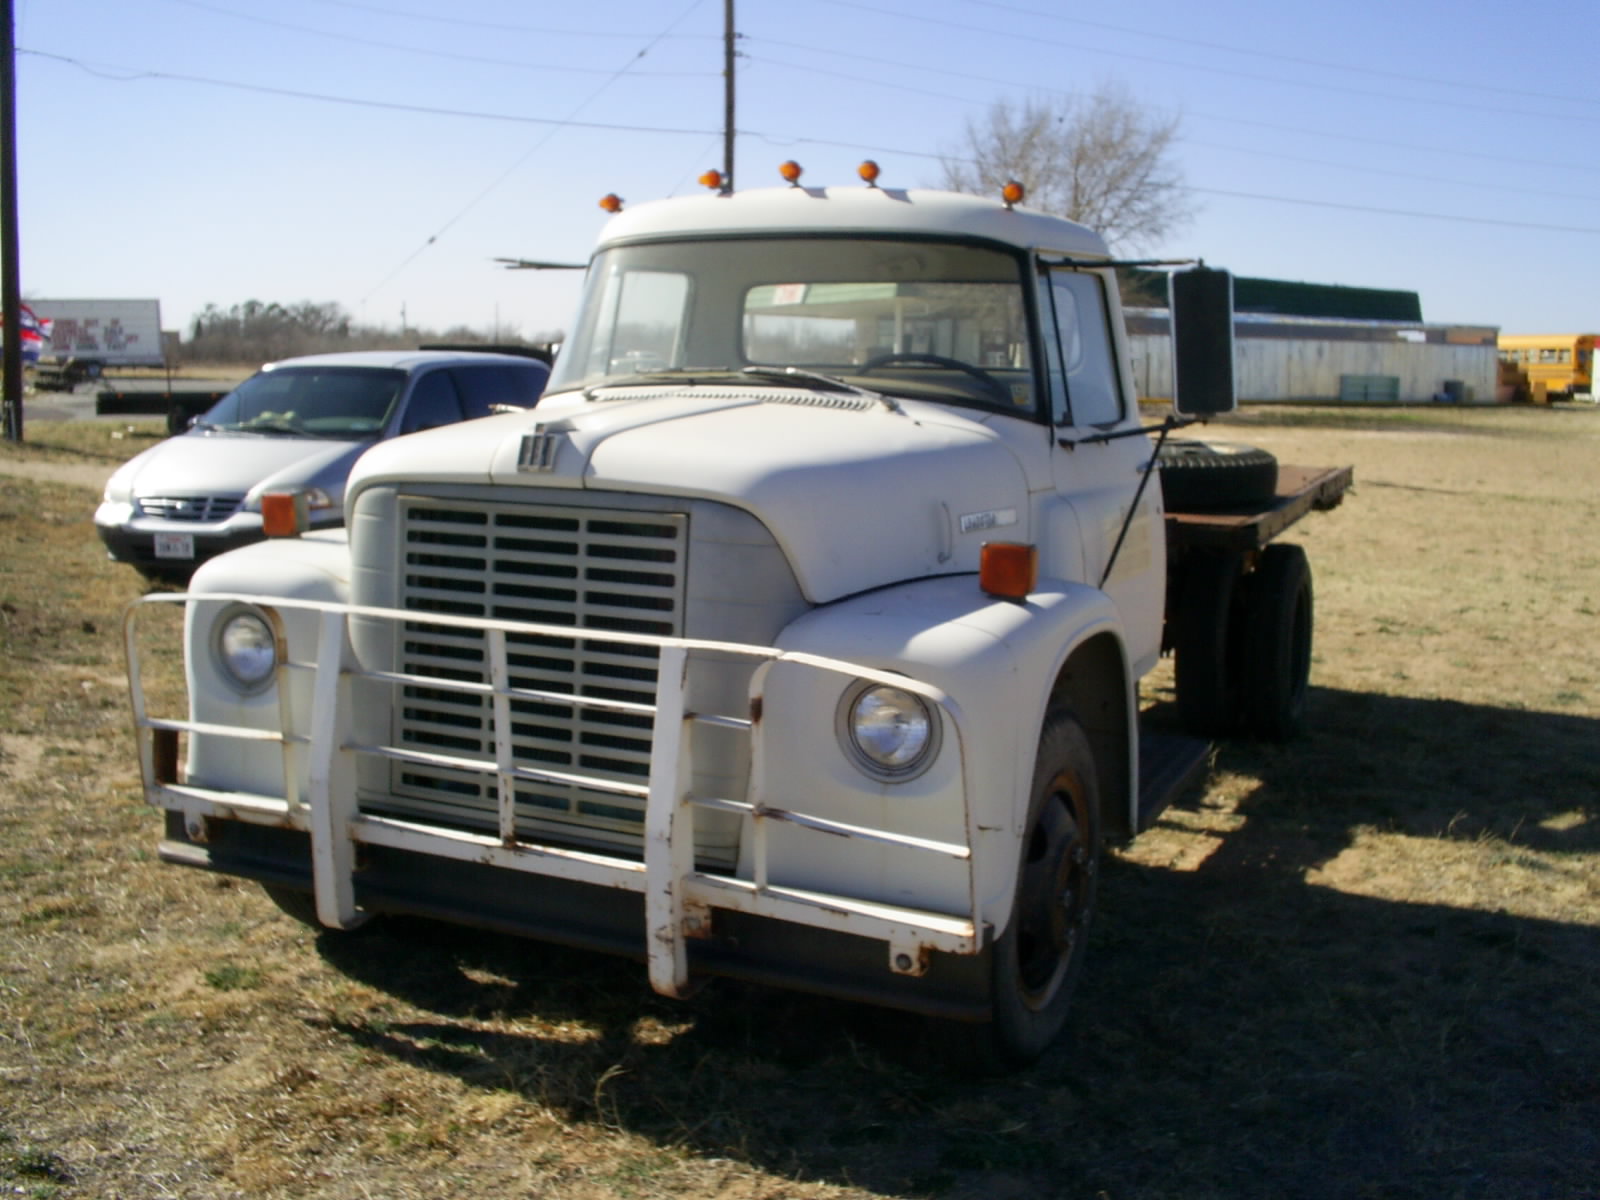 1975 Loadstar 1600 Truck and 1970's Dodge Van in Coahoma, Texas